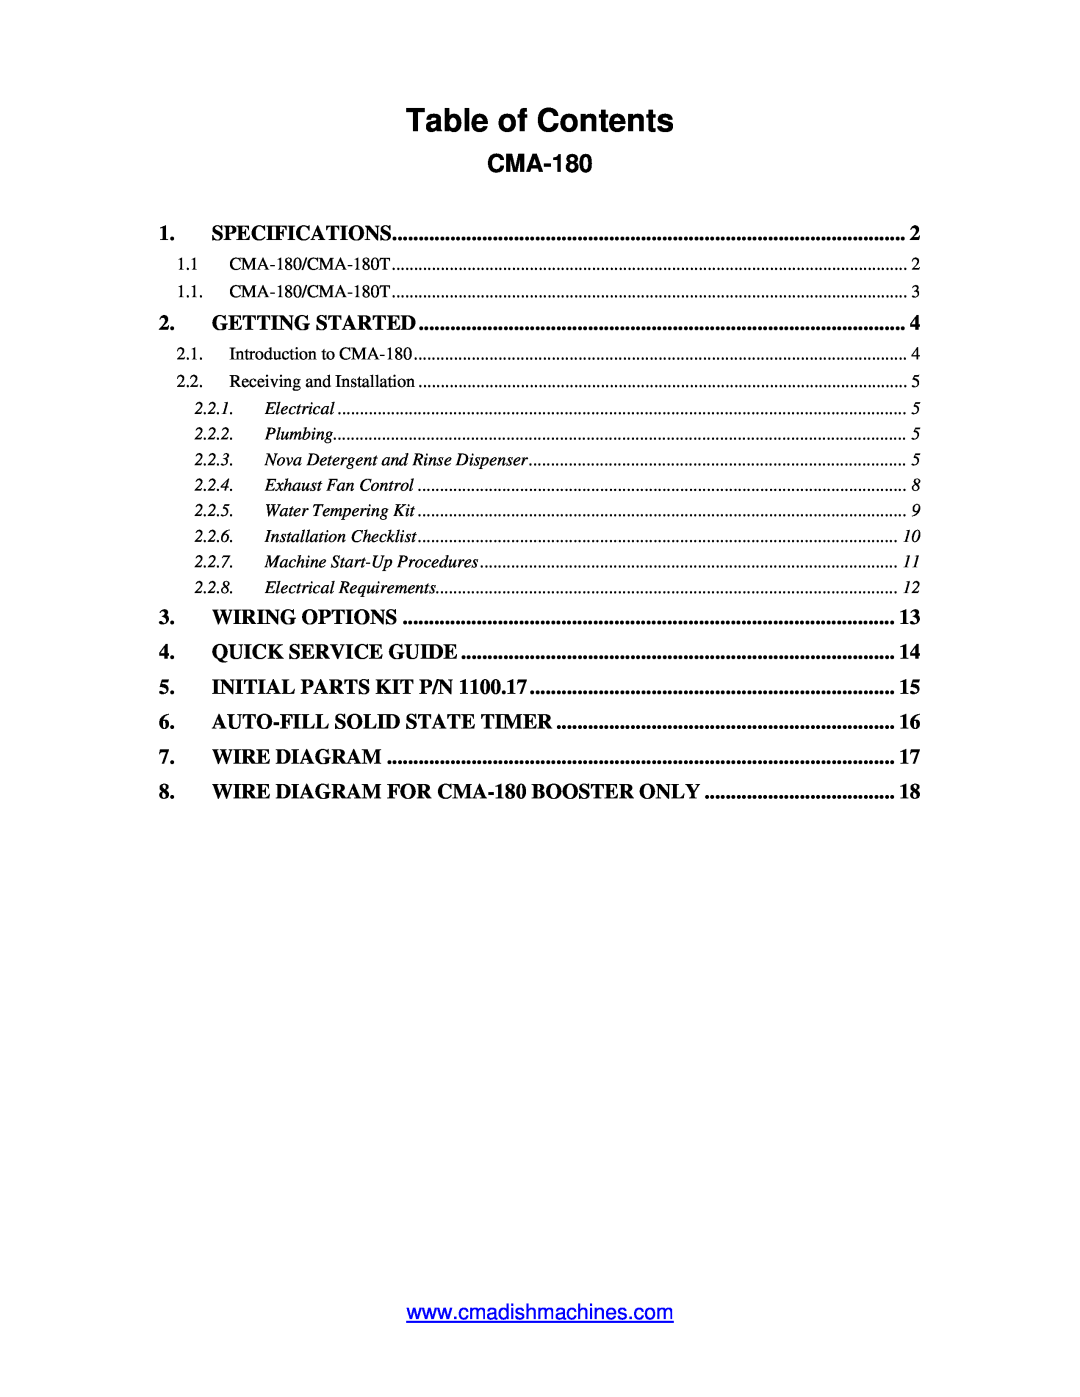 CMA Dishmachines CMA-180 manual Table of Contents 